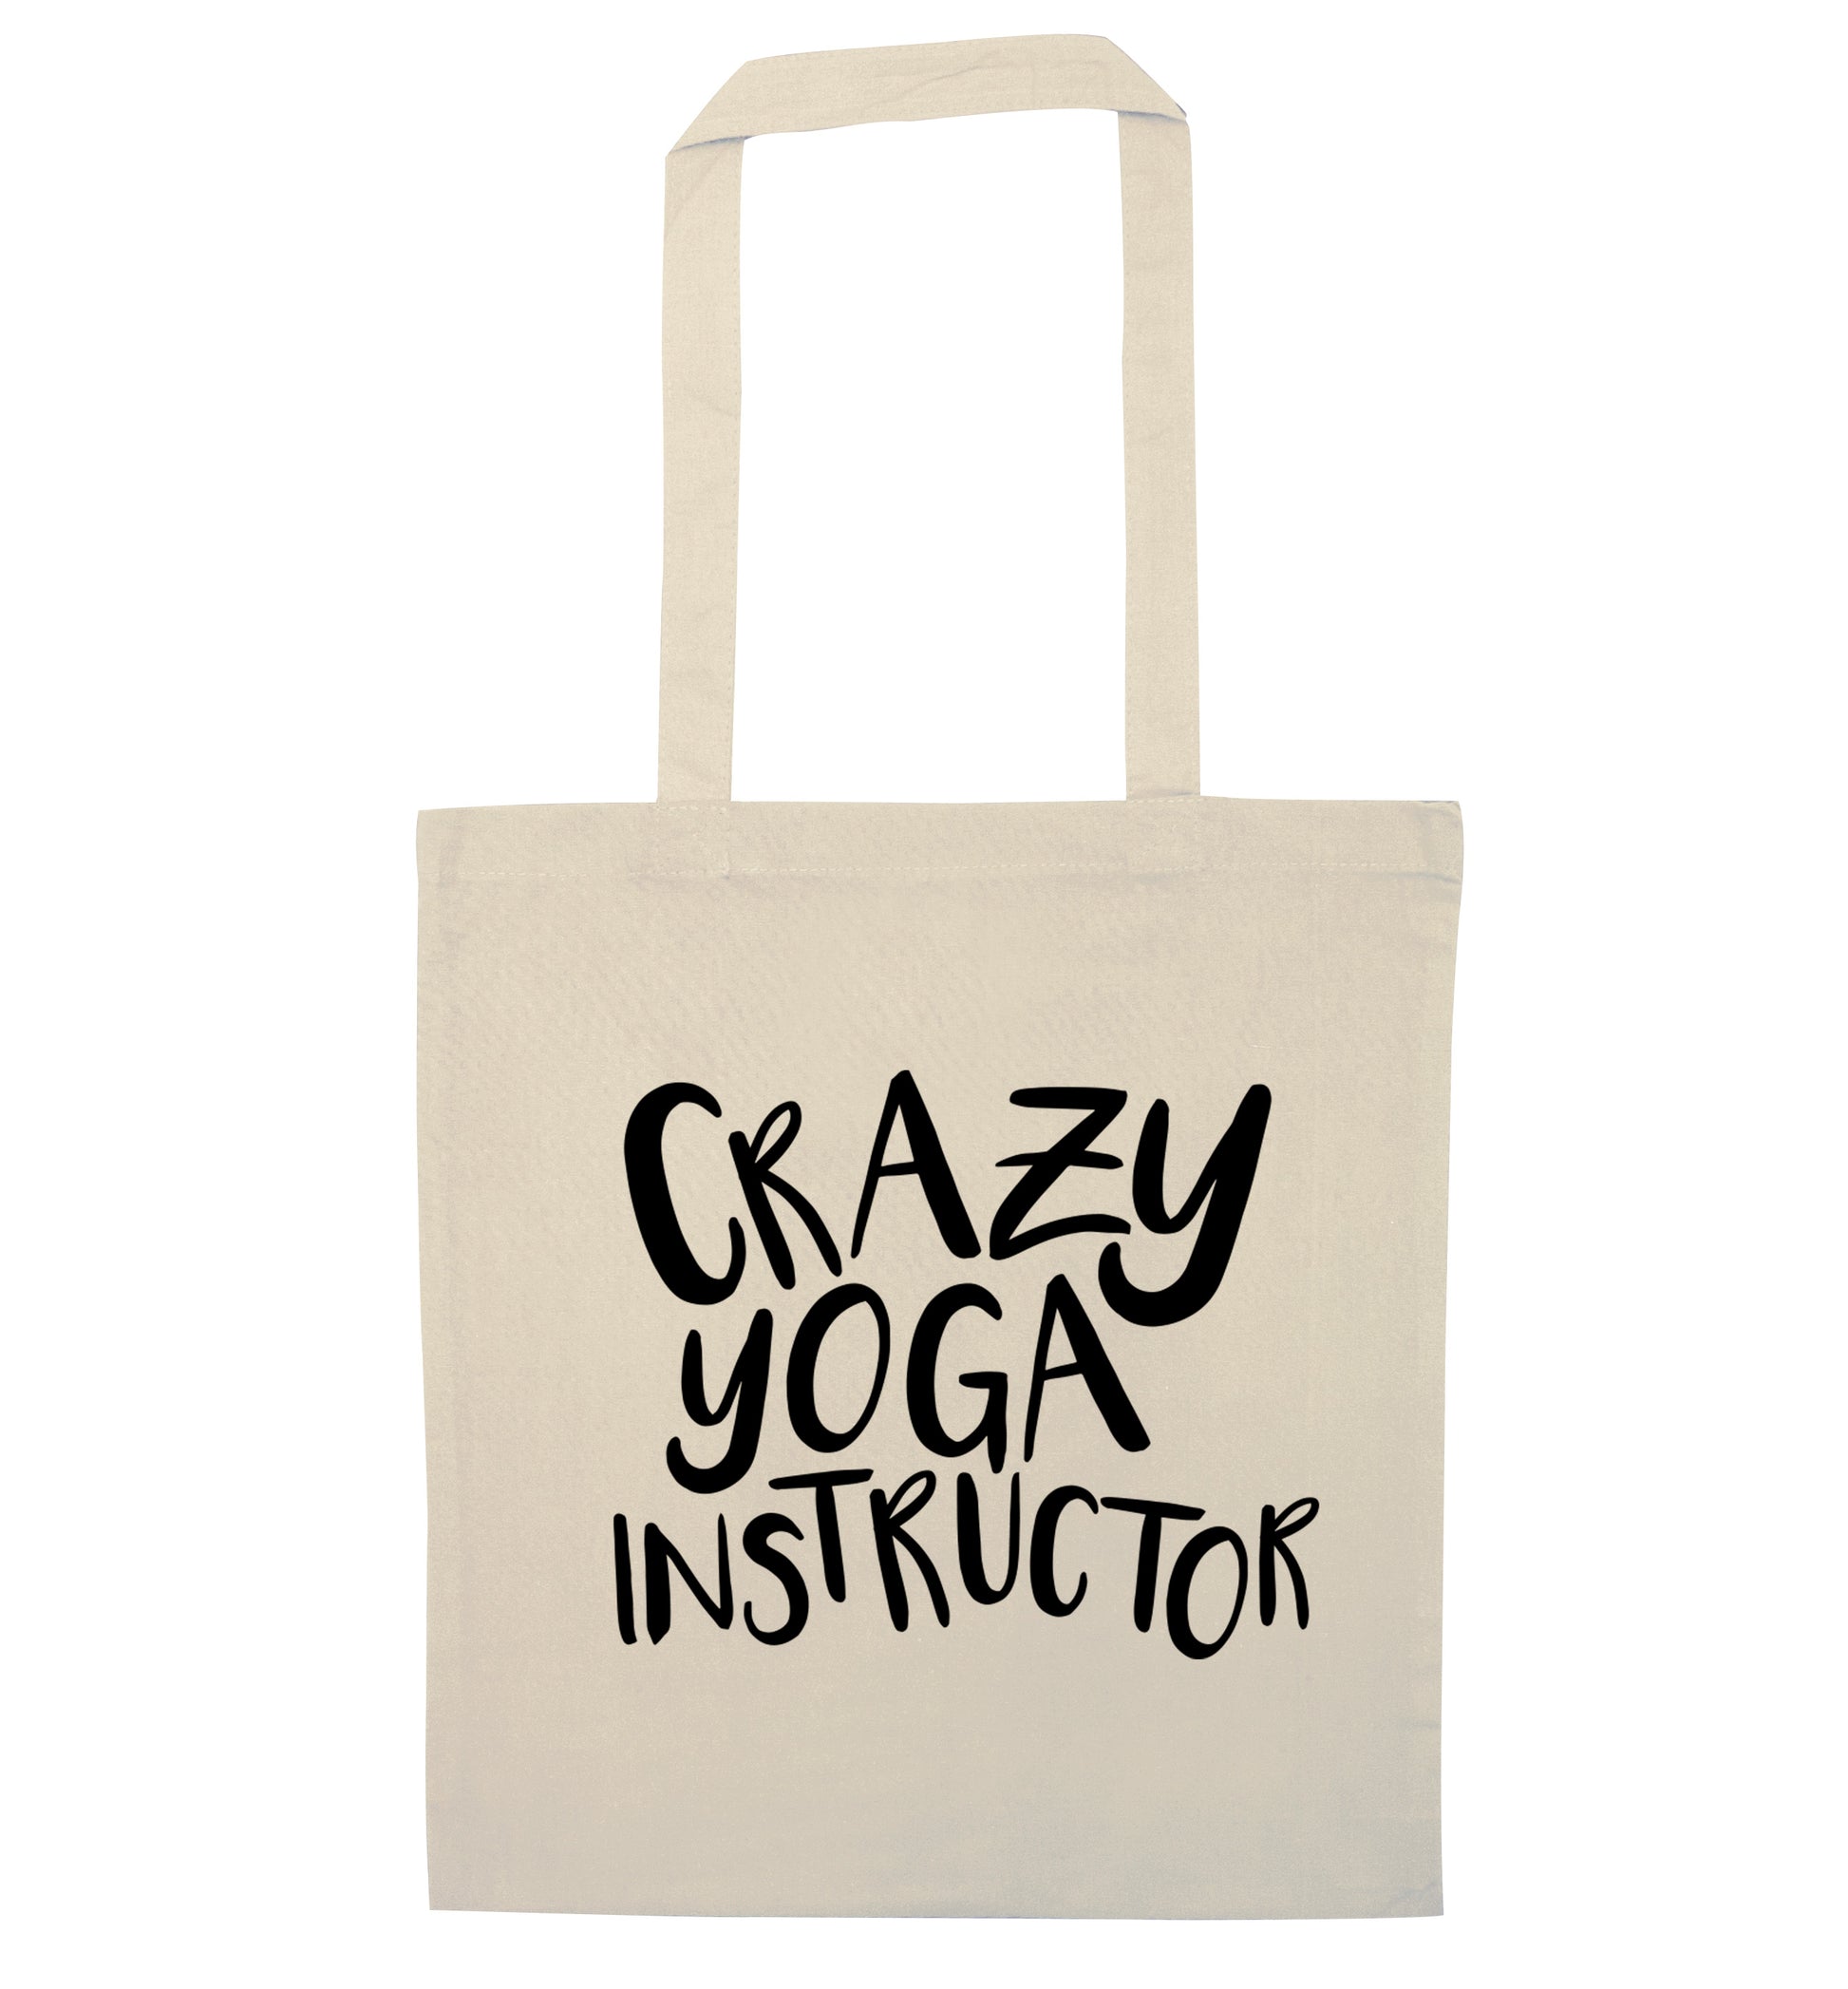 Crazy yoga instructor natural tote bag